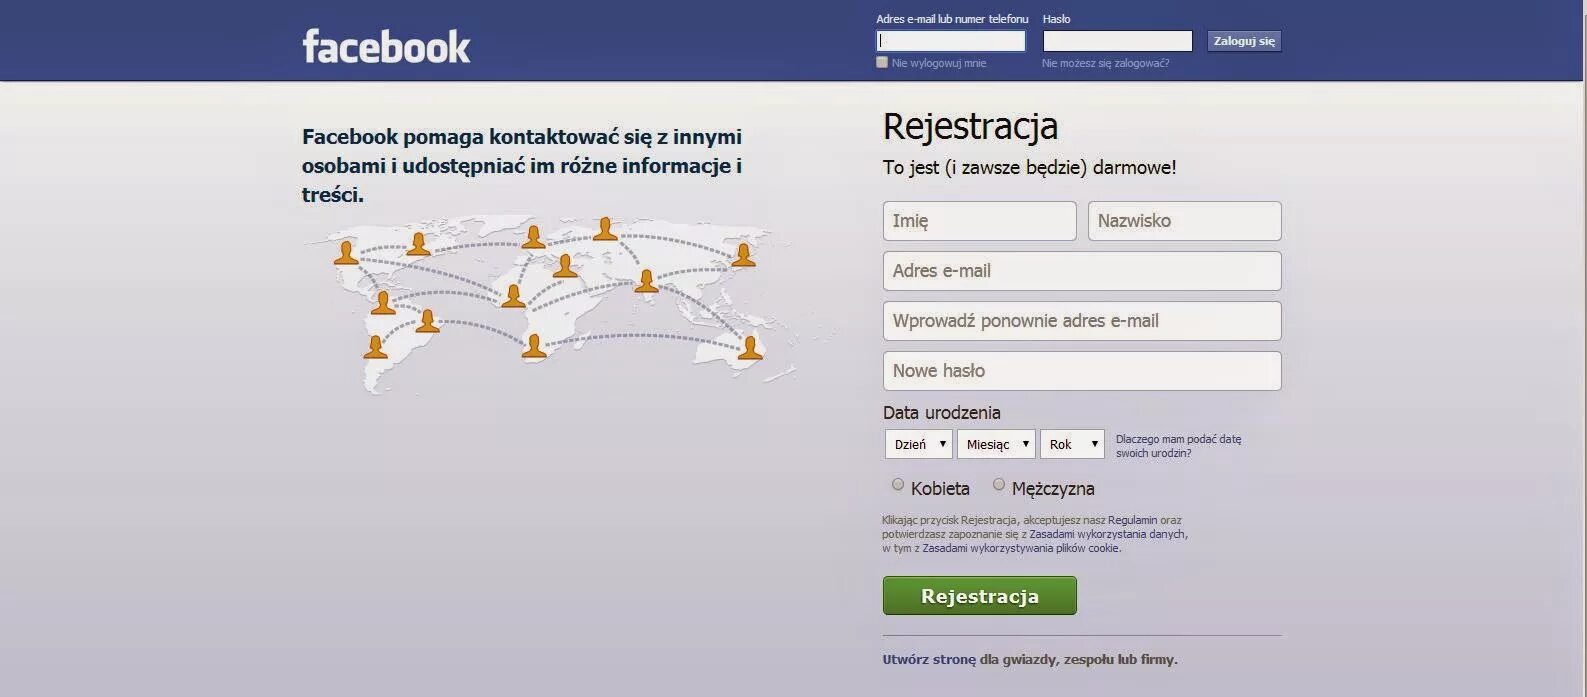 Facebook web Page. Facebook login. M.Facebook.com.